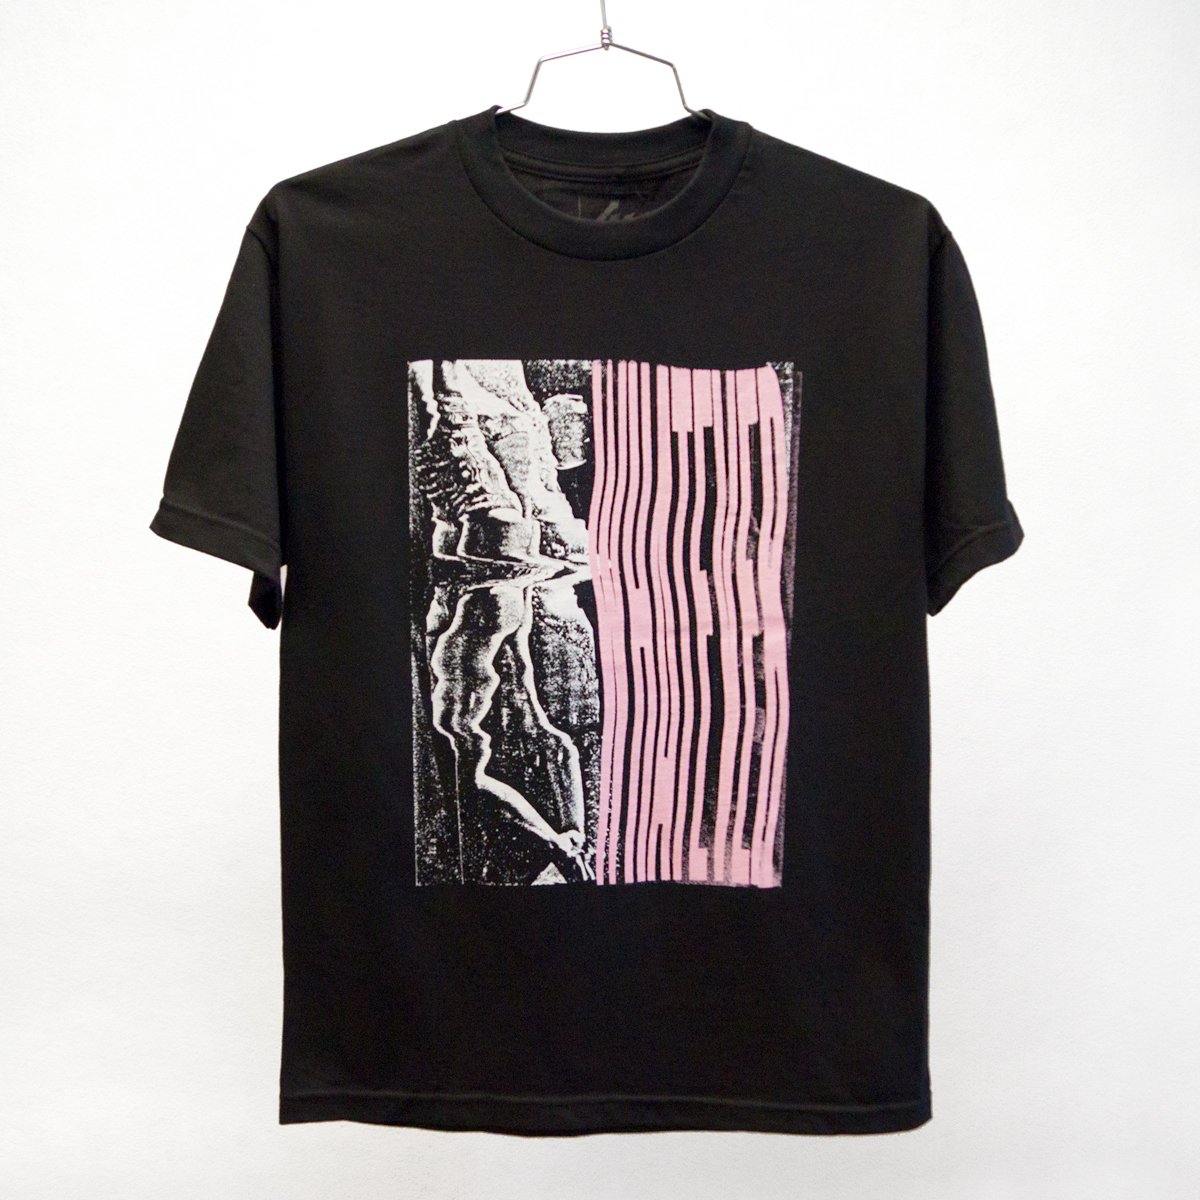 Buy – Whatever Shirt – Cold Cuts Ltd